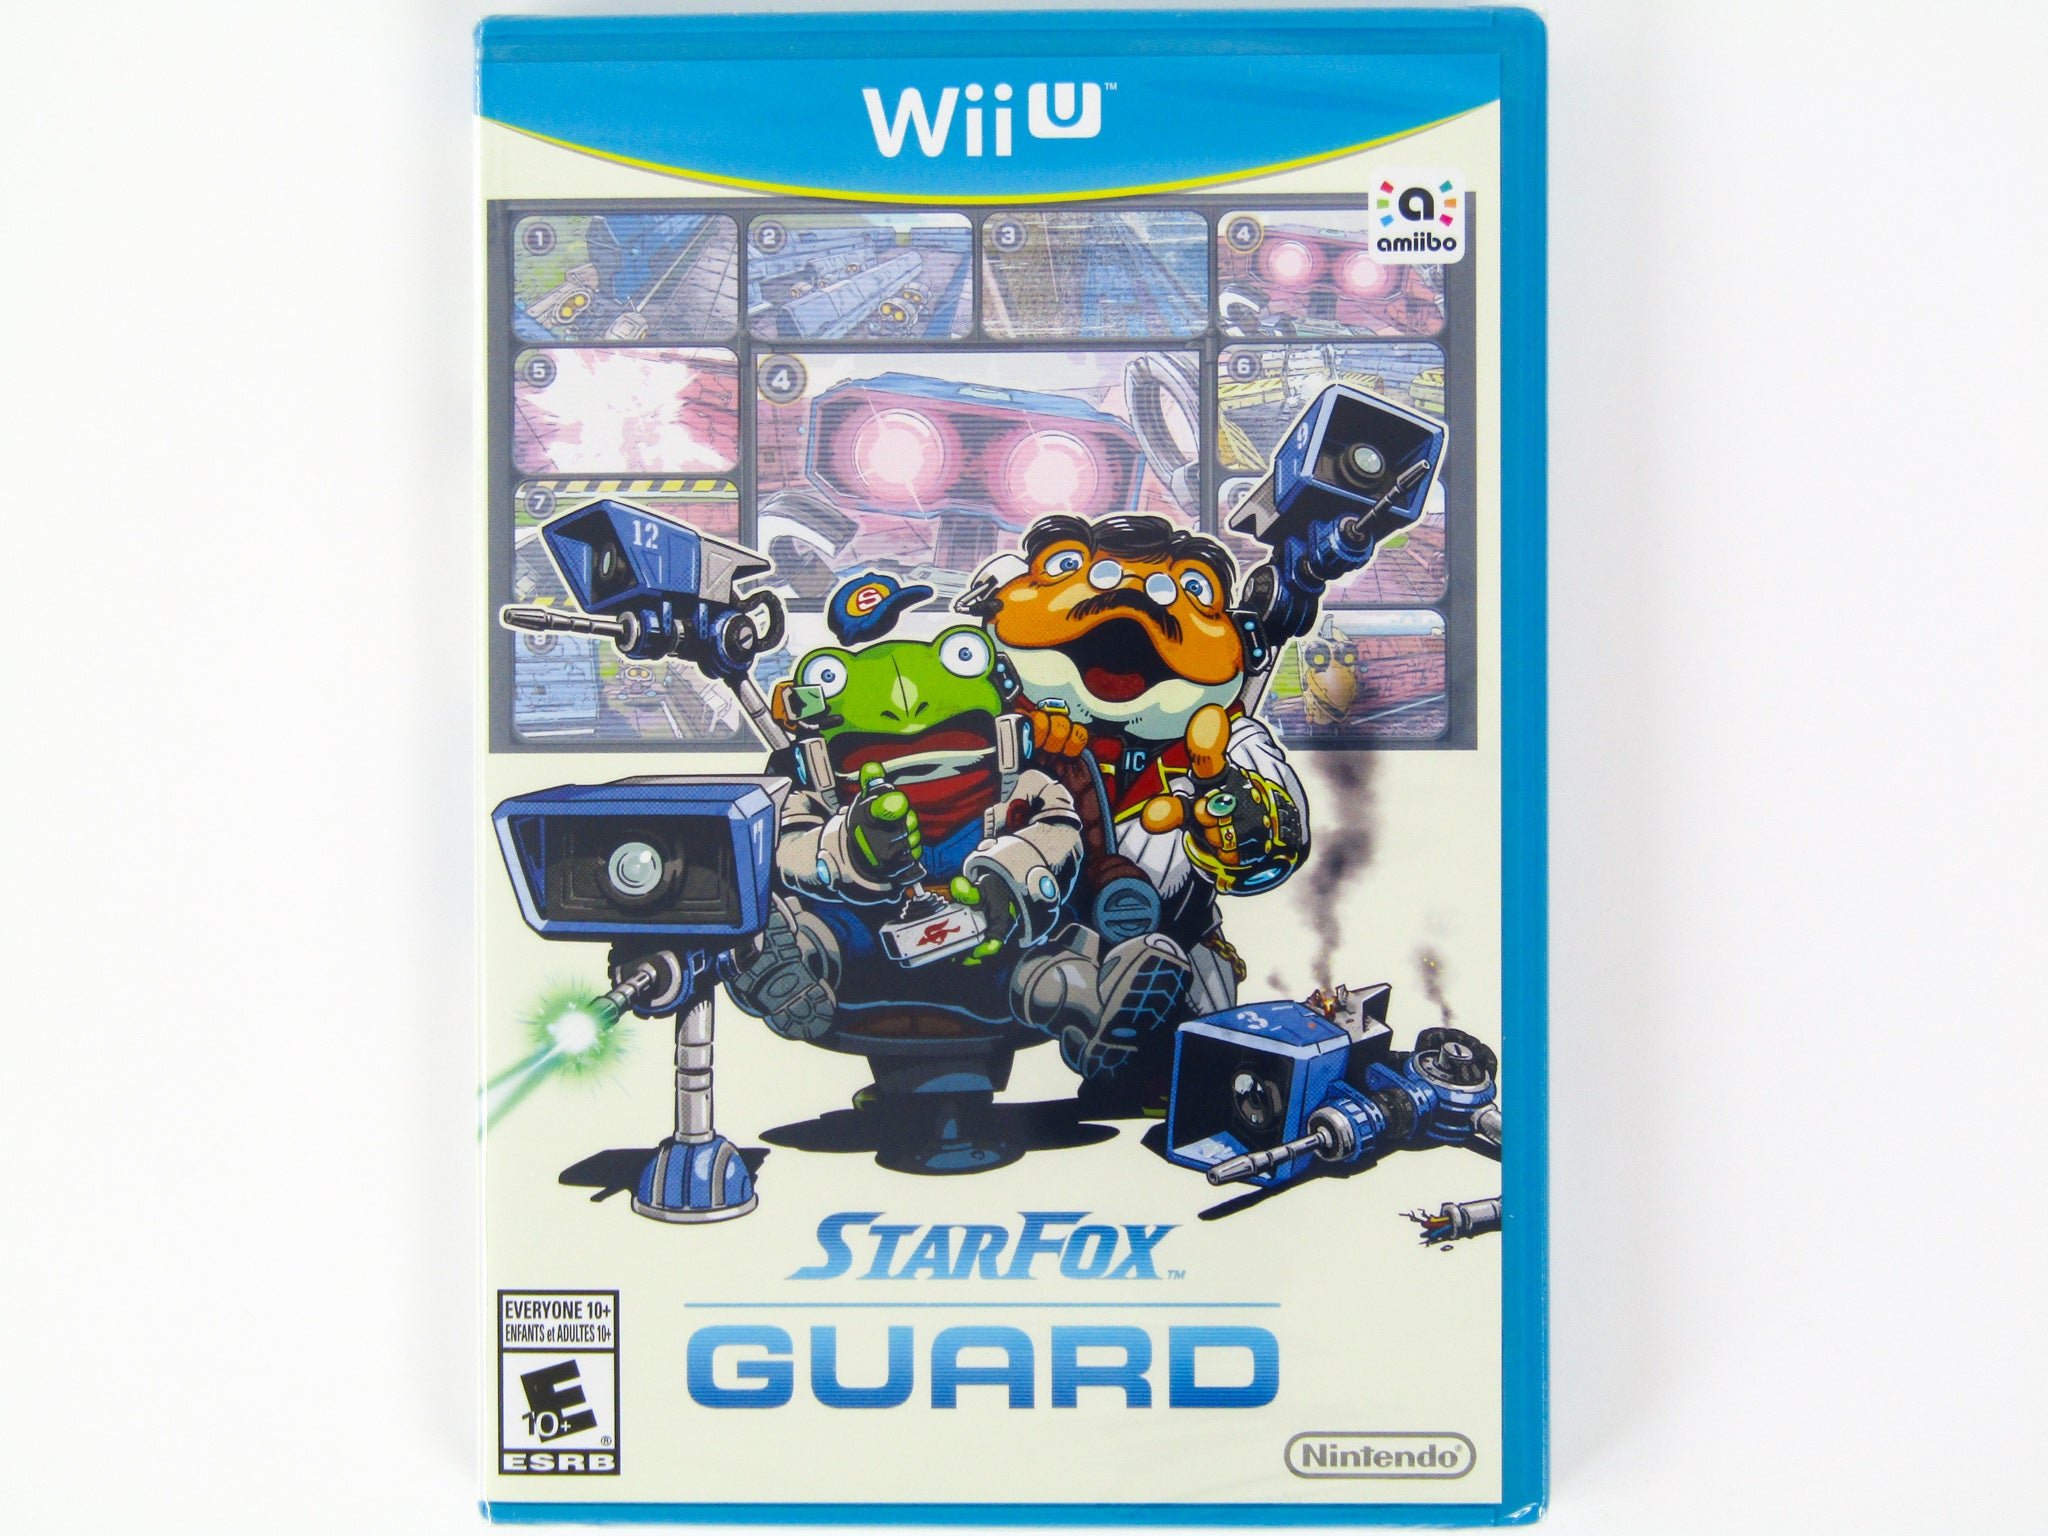 LOT Nintendo Wii U Star Fox Zero + Star Fox Guard Bundle 2 FACTORY SEALED  GAMES